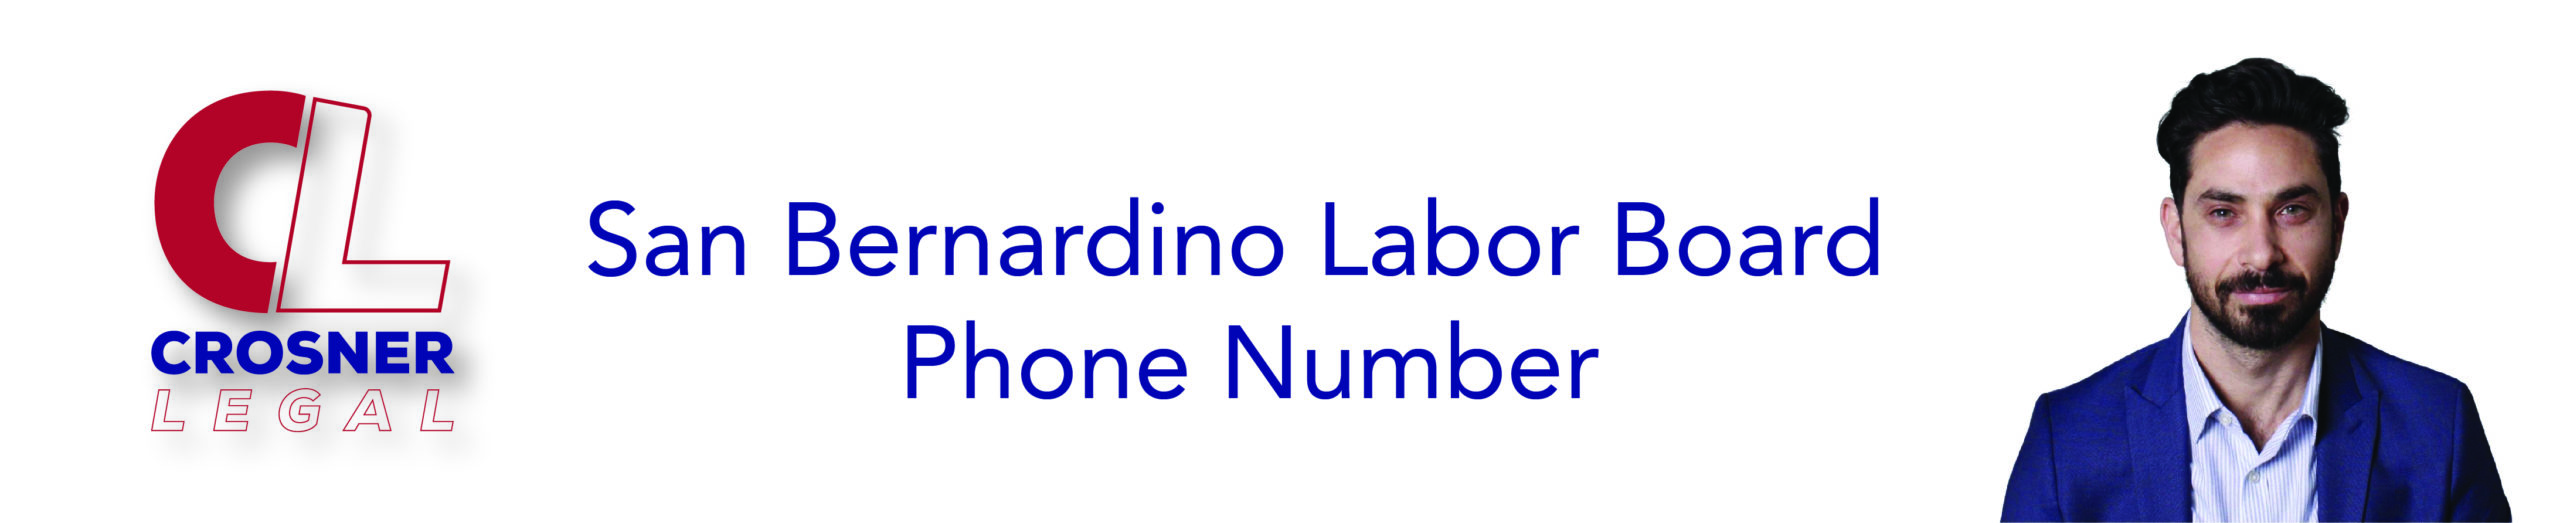 San Bernardino Labor Board Phone Number